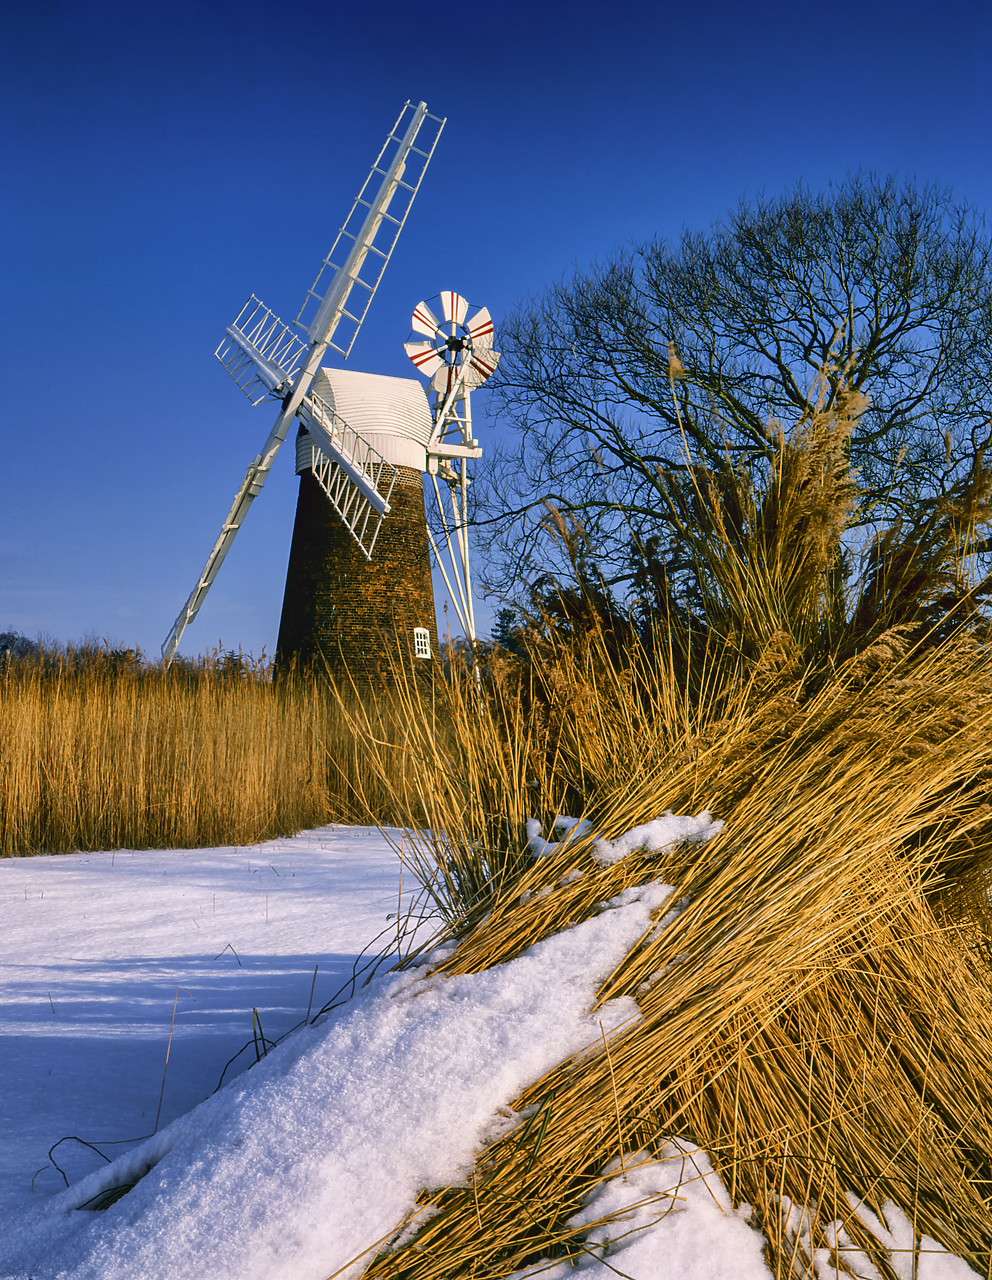 #400141-1 - Turf Fen Mill in Winter, Norfolk Broads National Park, Norfolk, England